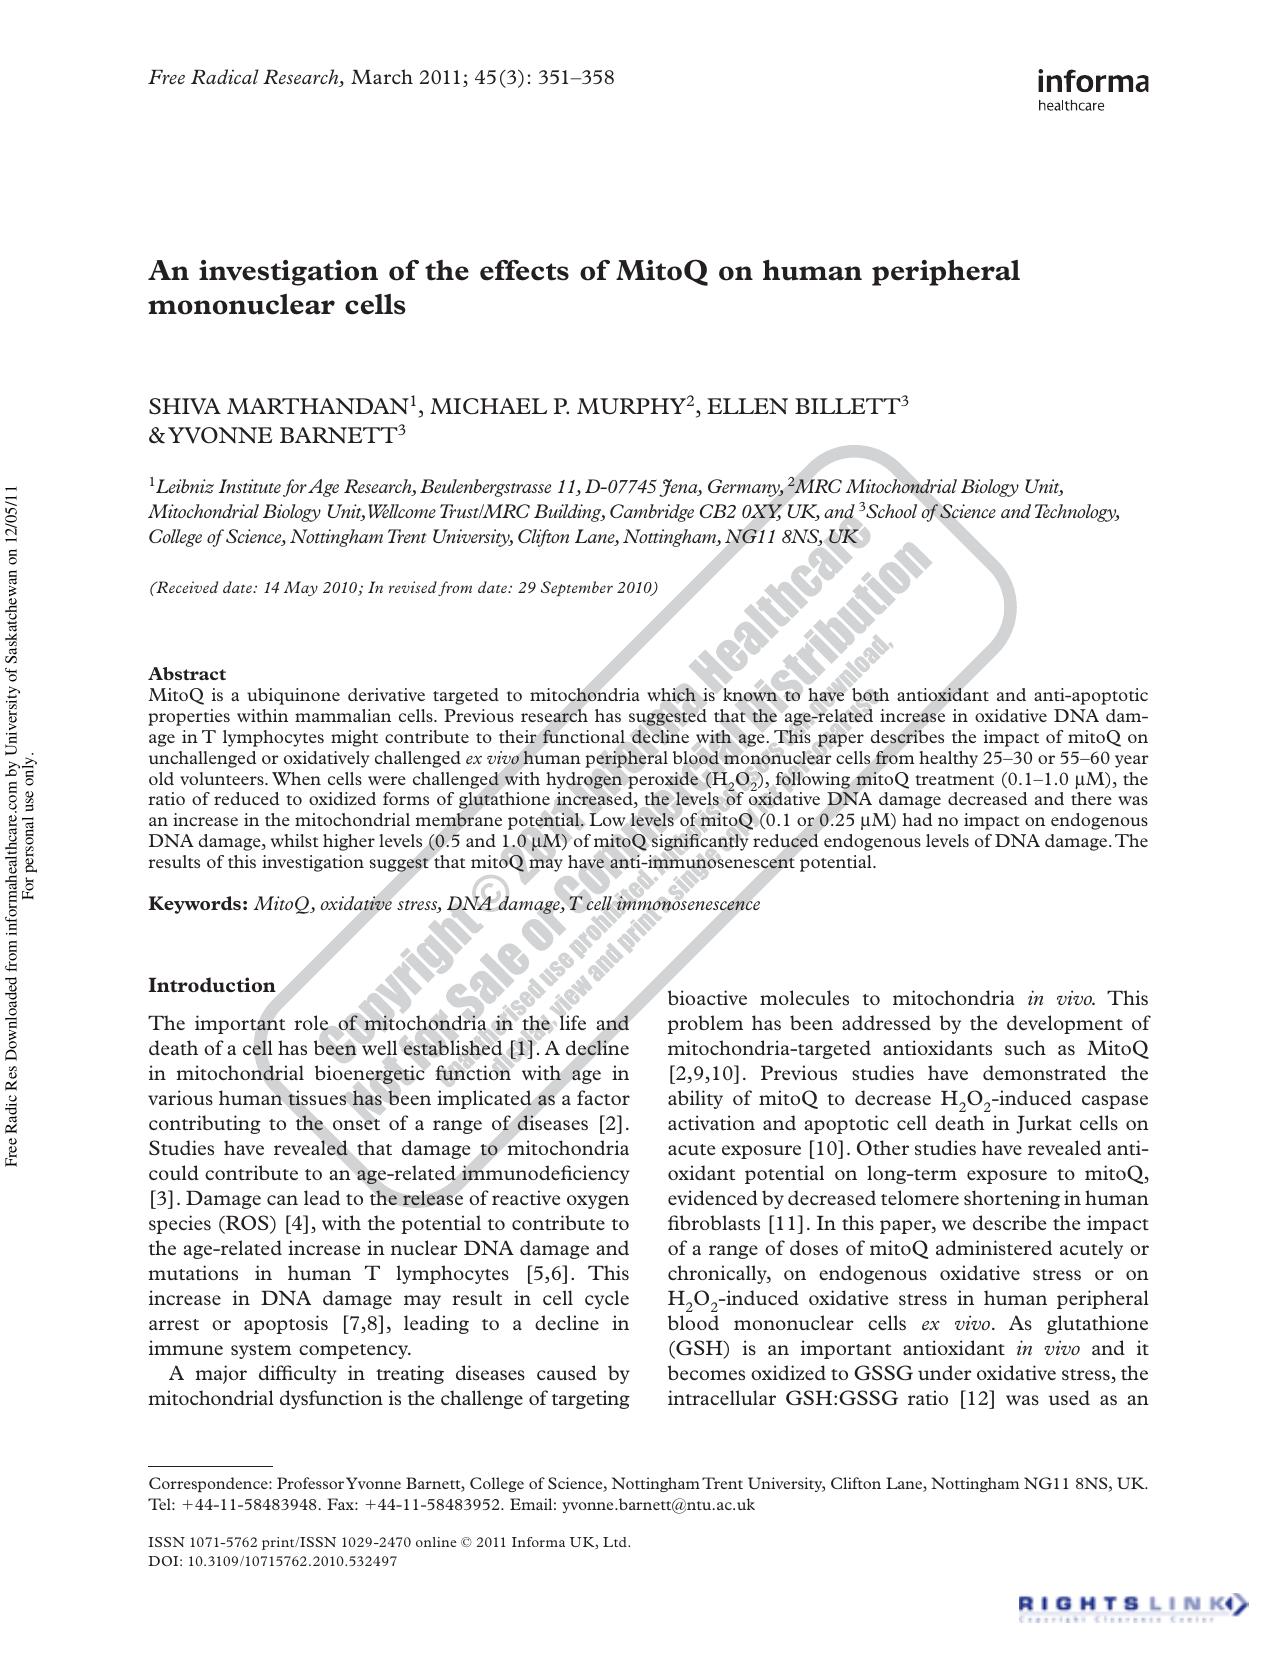 An investigation of the effects of MitoQ on human peripheral mononuclear cells by Shiva Marthandan 1 Michael P. Murphy 2 Ellen Billett 3 & Yvonne Barnett 3yvonne.barnett@ntu.ac.uk